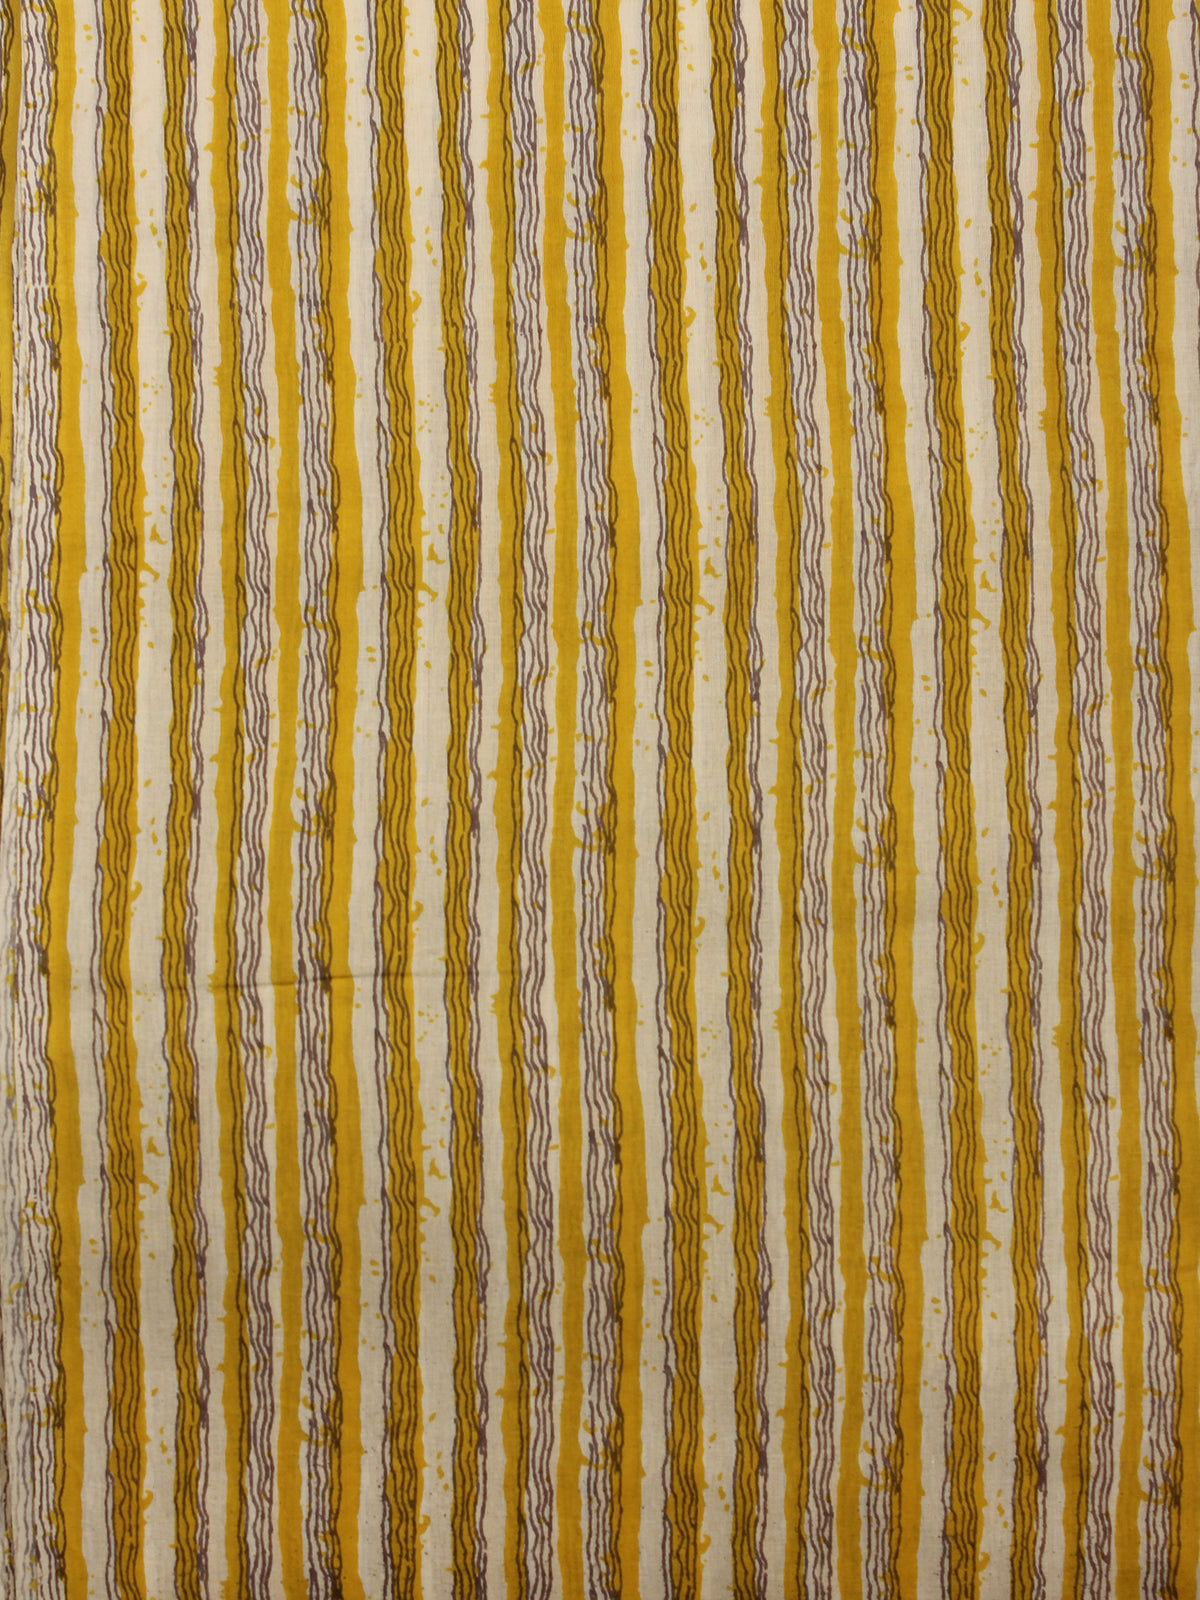 Mustard Ivory Brown Hand Block Printed Cotton Fabric Per Meter - F001F2019